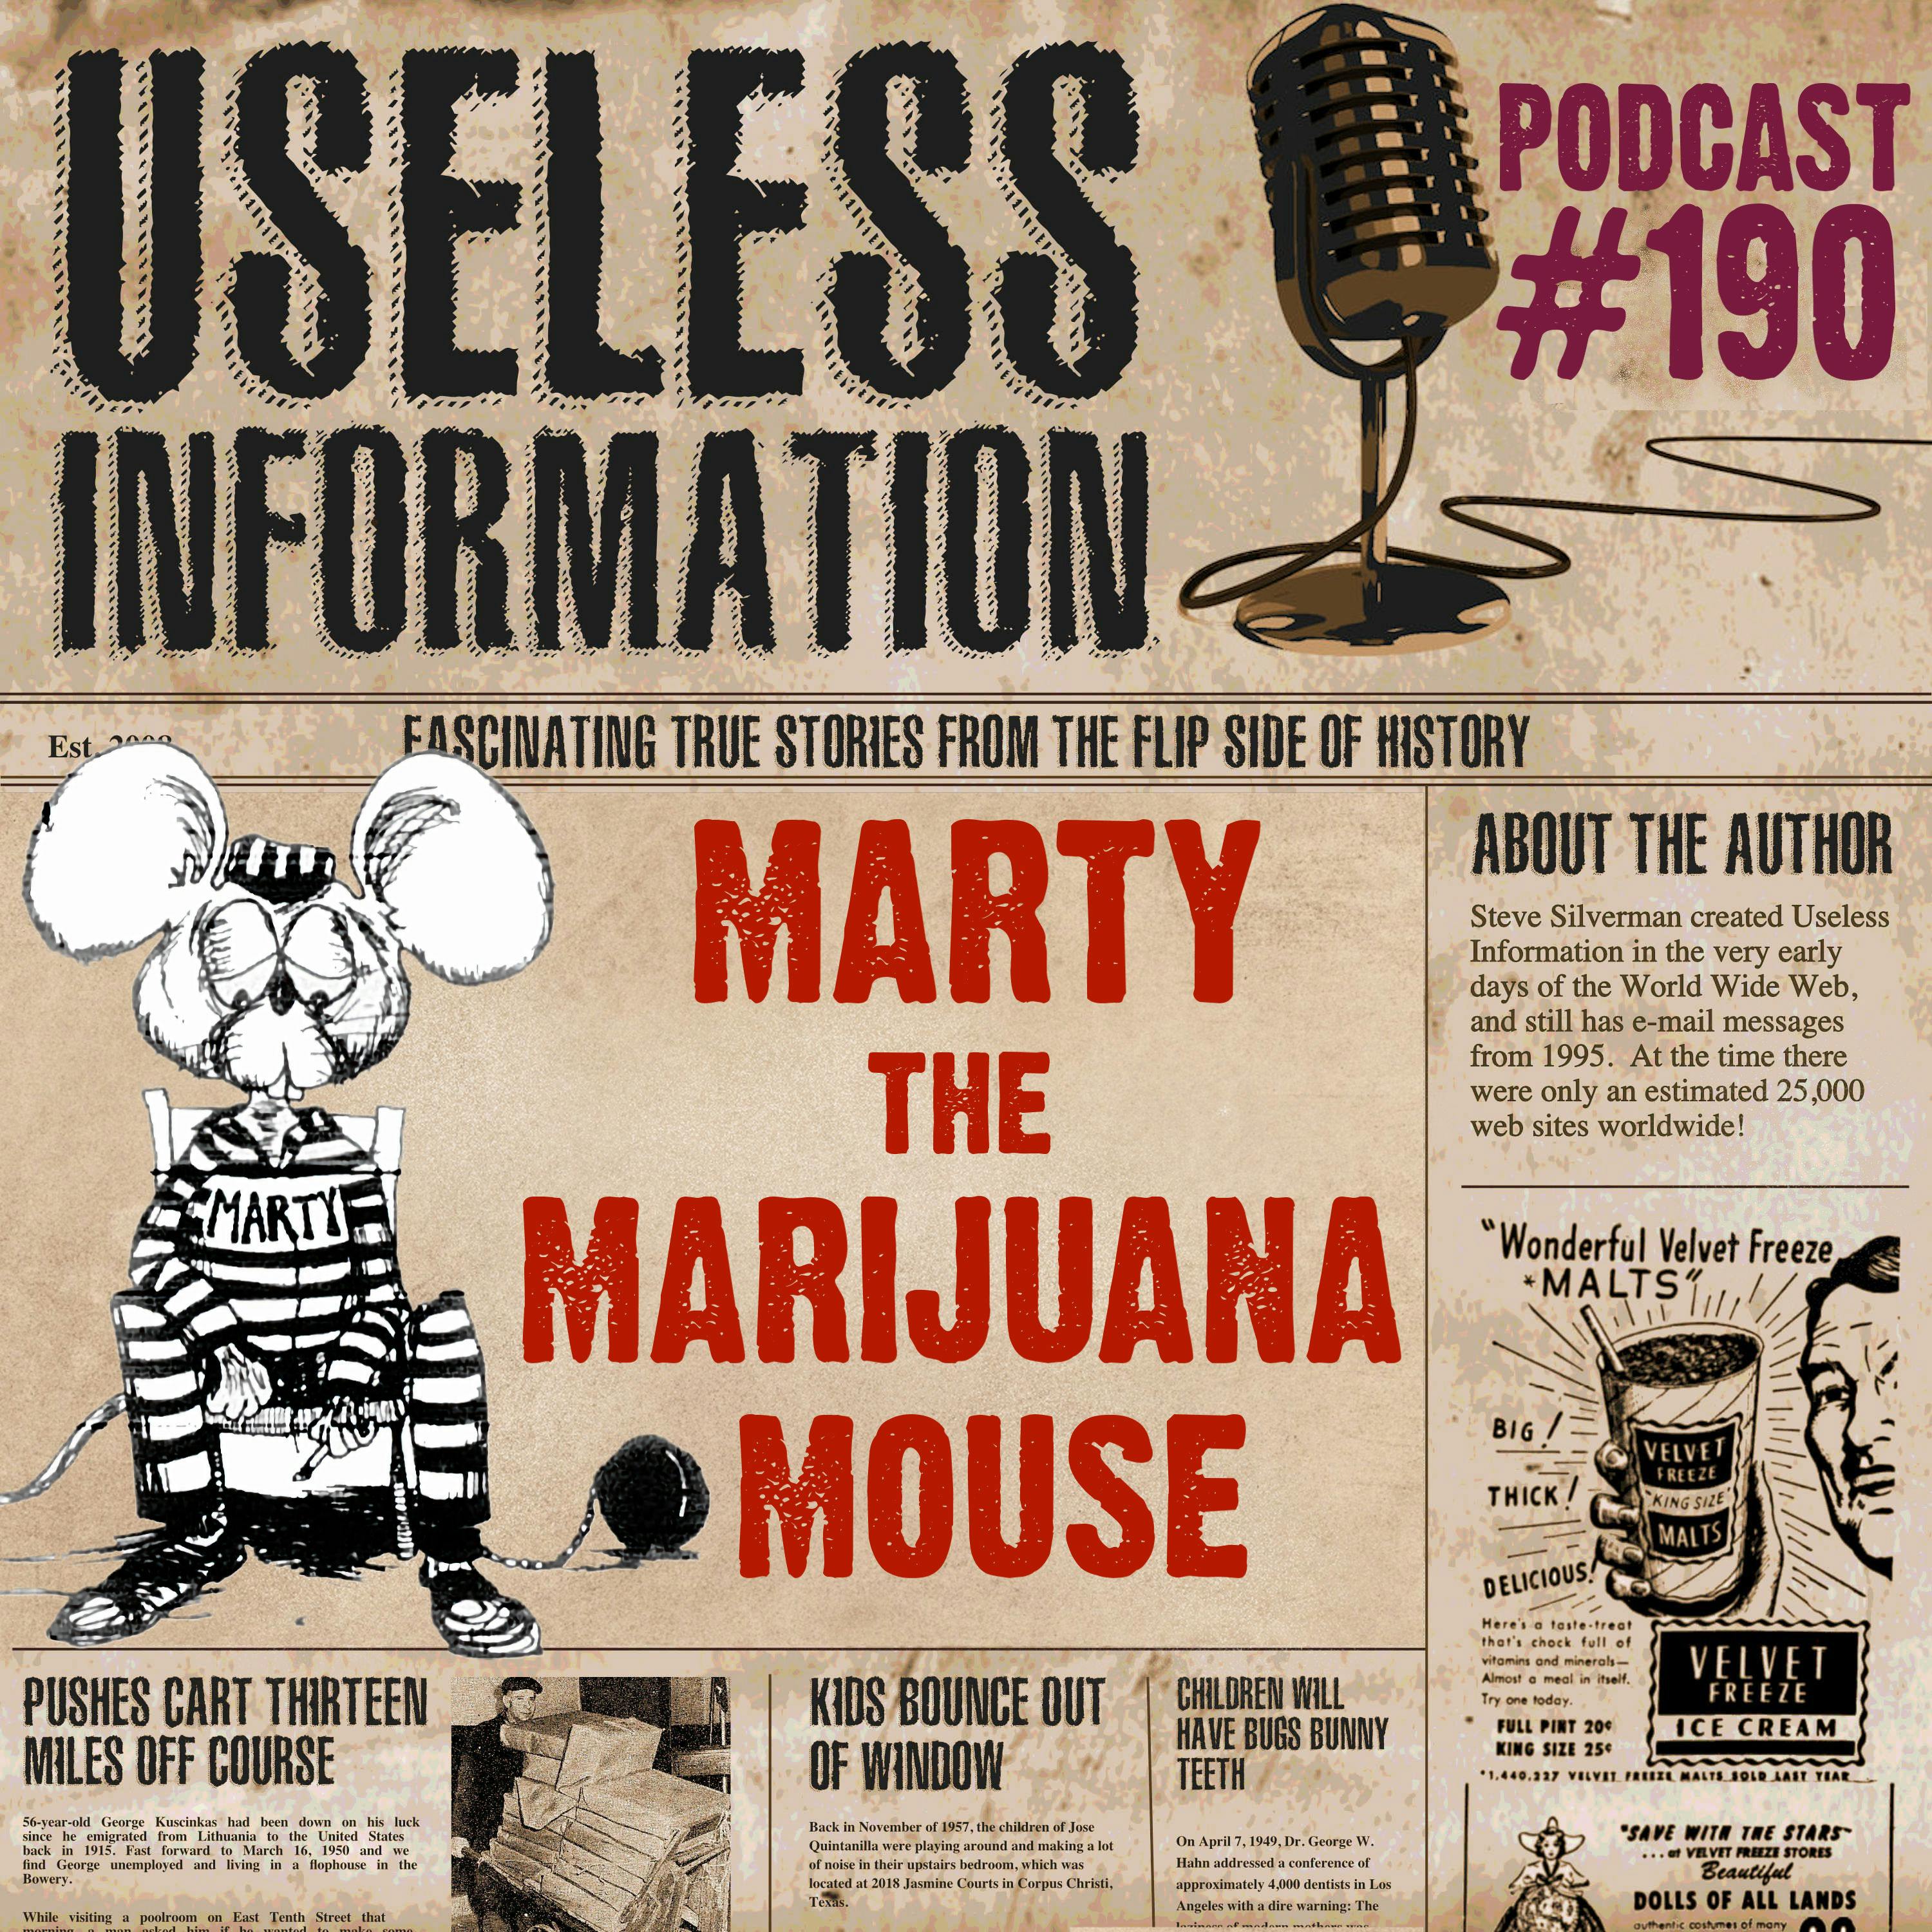 Marty the Marijuana Mouse - UI Podcast #190